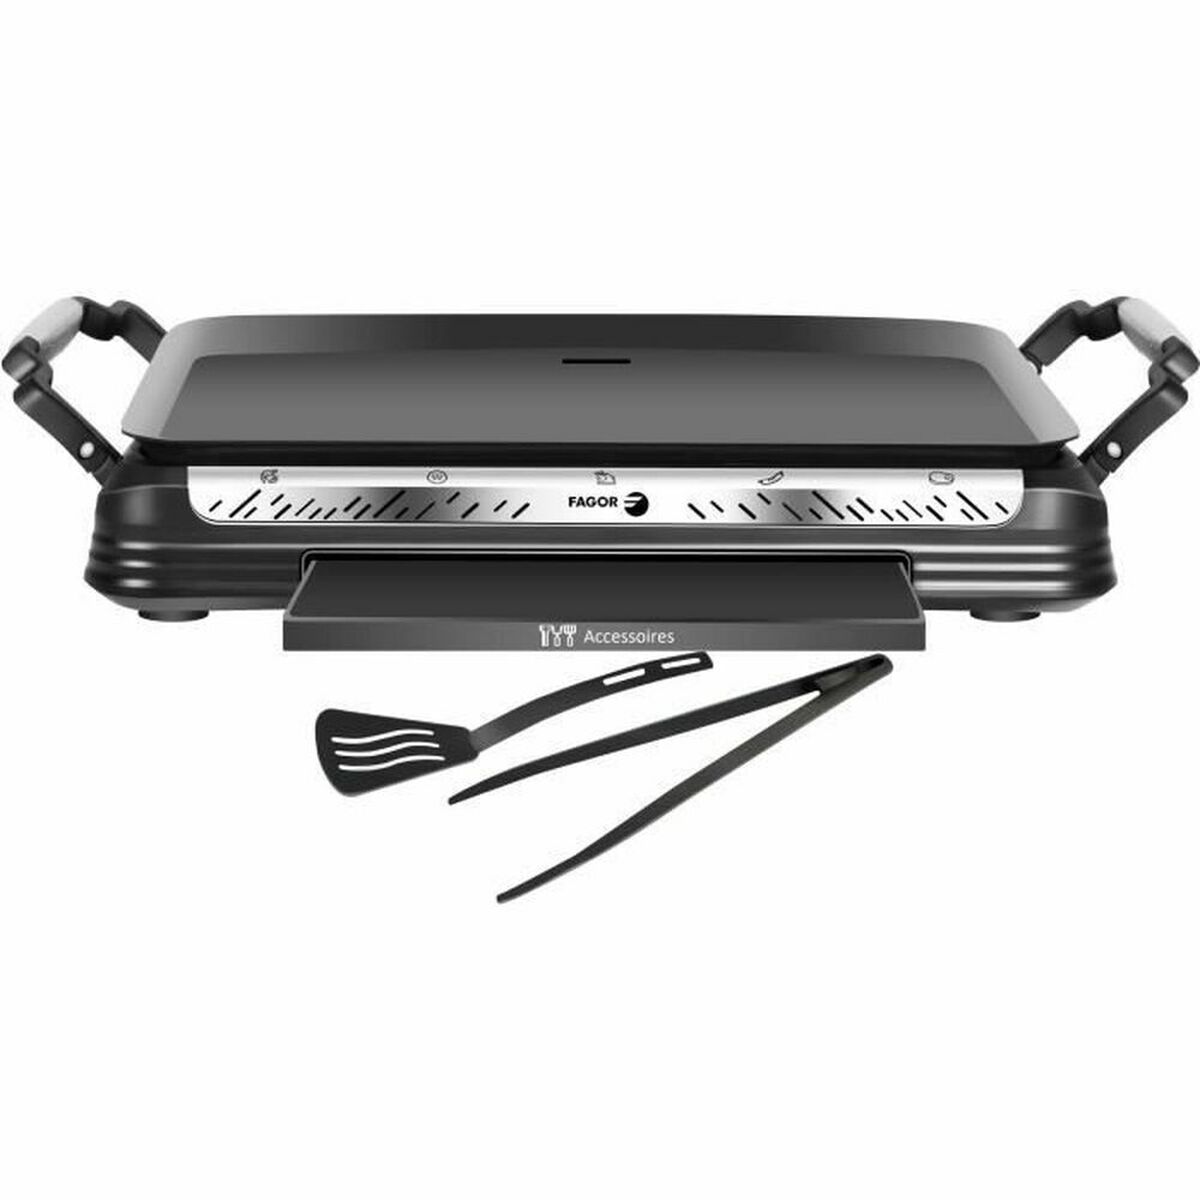 Plaque chauffantes grill FAGOR FG576 2200 W